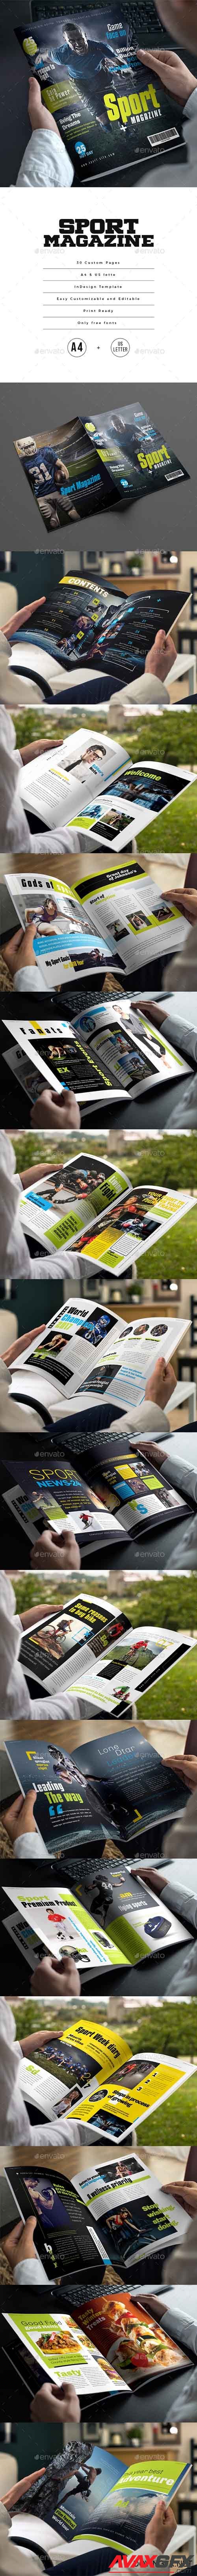 Graphicriver - Sport Magazine 21376536